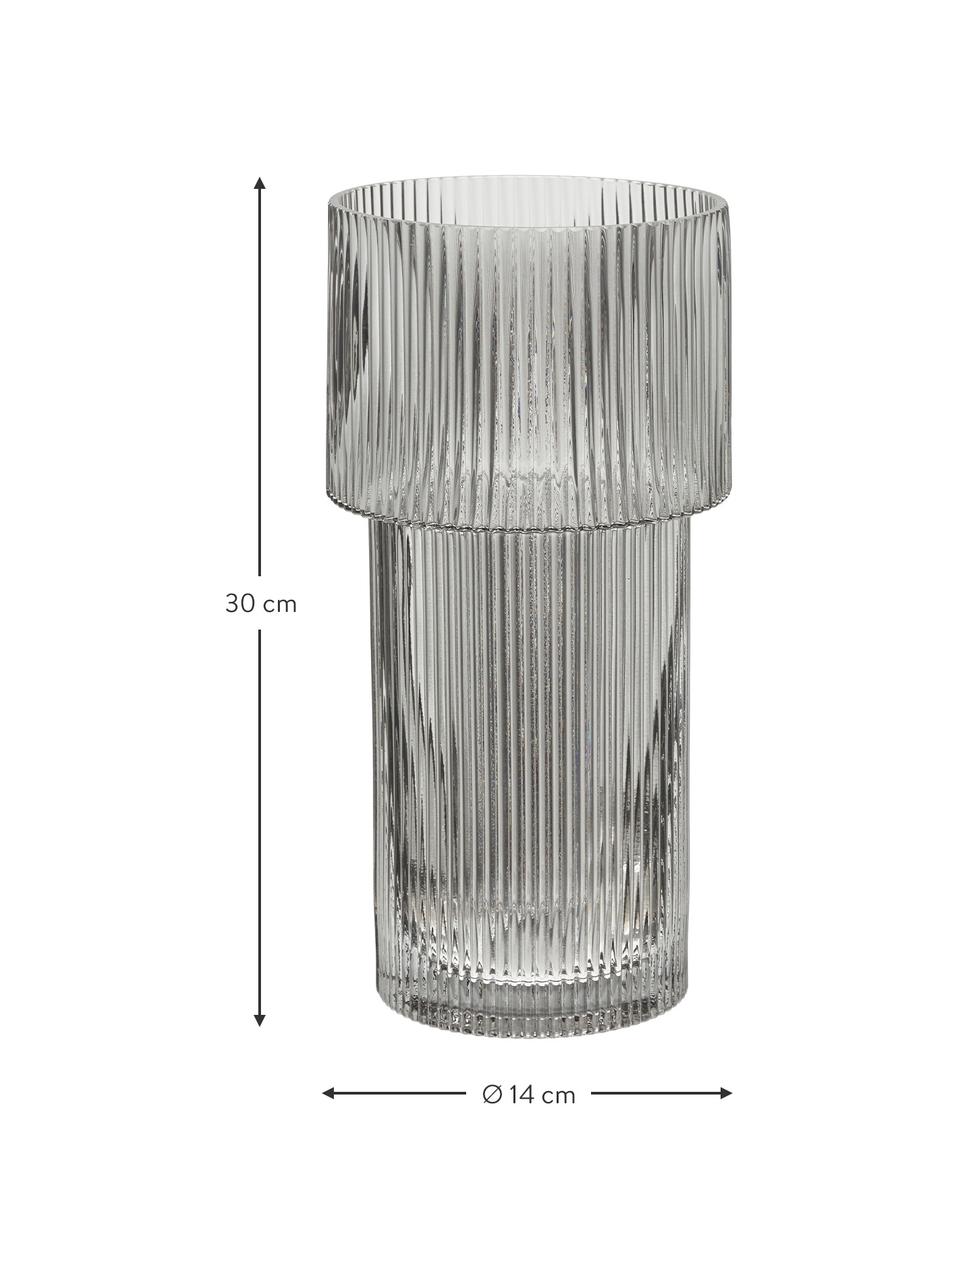 Glazen vaas Lija in grijs, Glas, Grijs, transparant, Ø 14 x H 30 cm